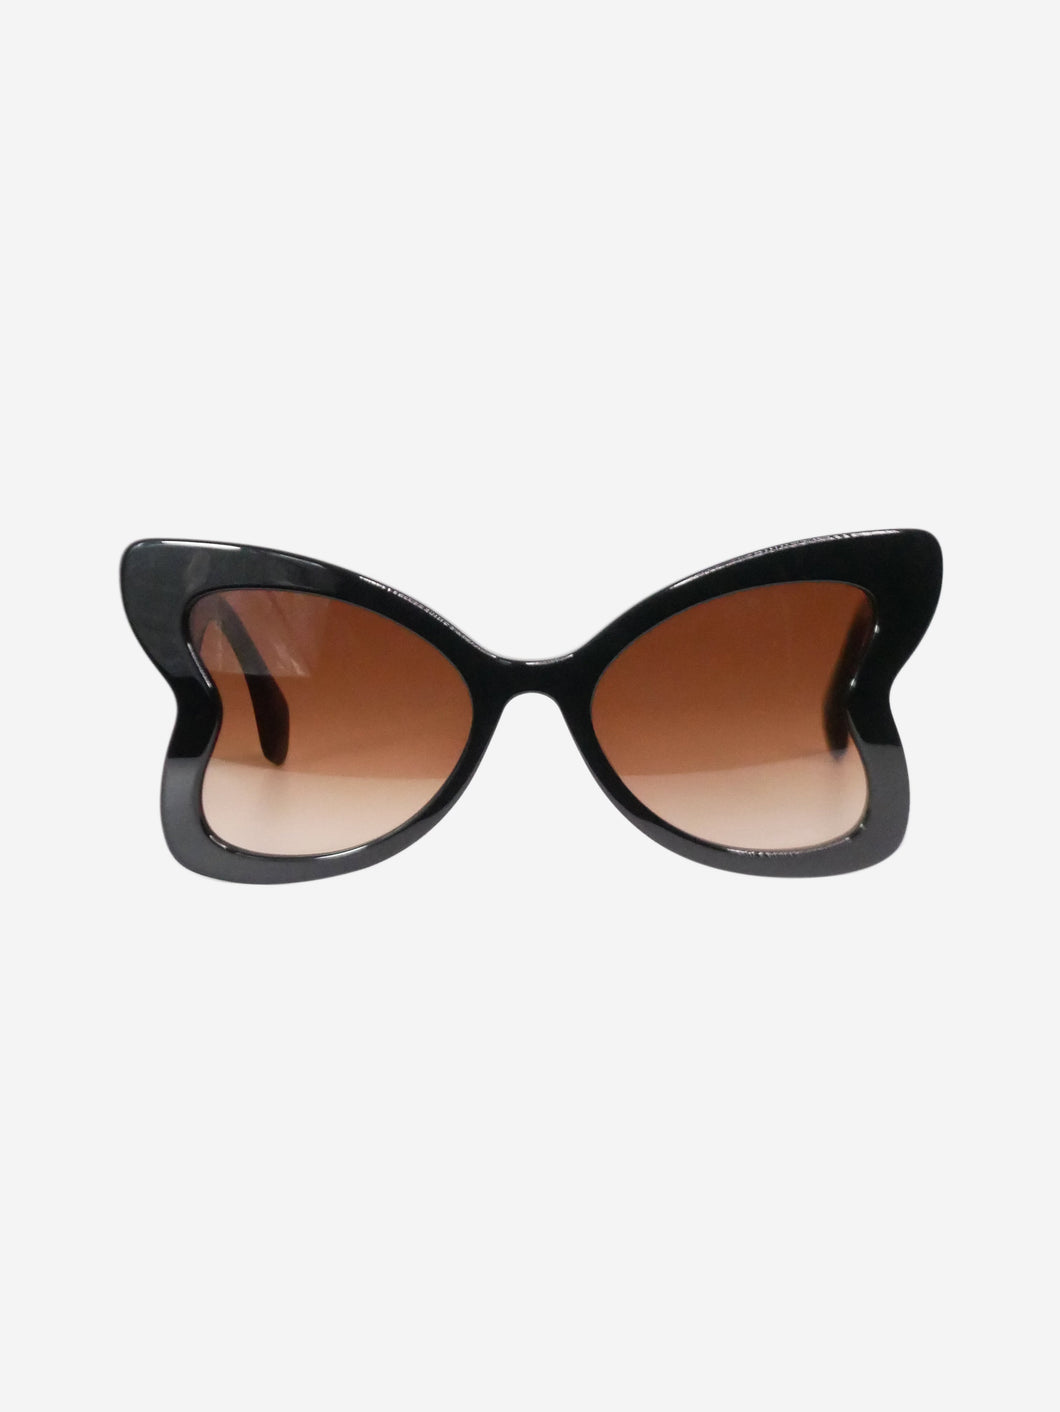 Vivienne Westwood Black heart shaped diamonte embellished sunglasses - size Sunglasses Vivienne Westwood 